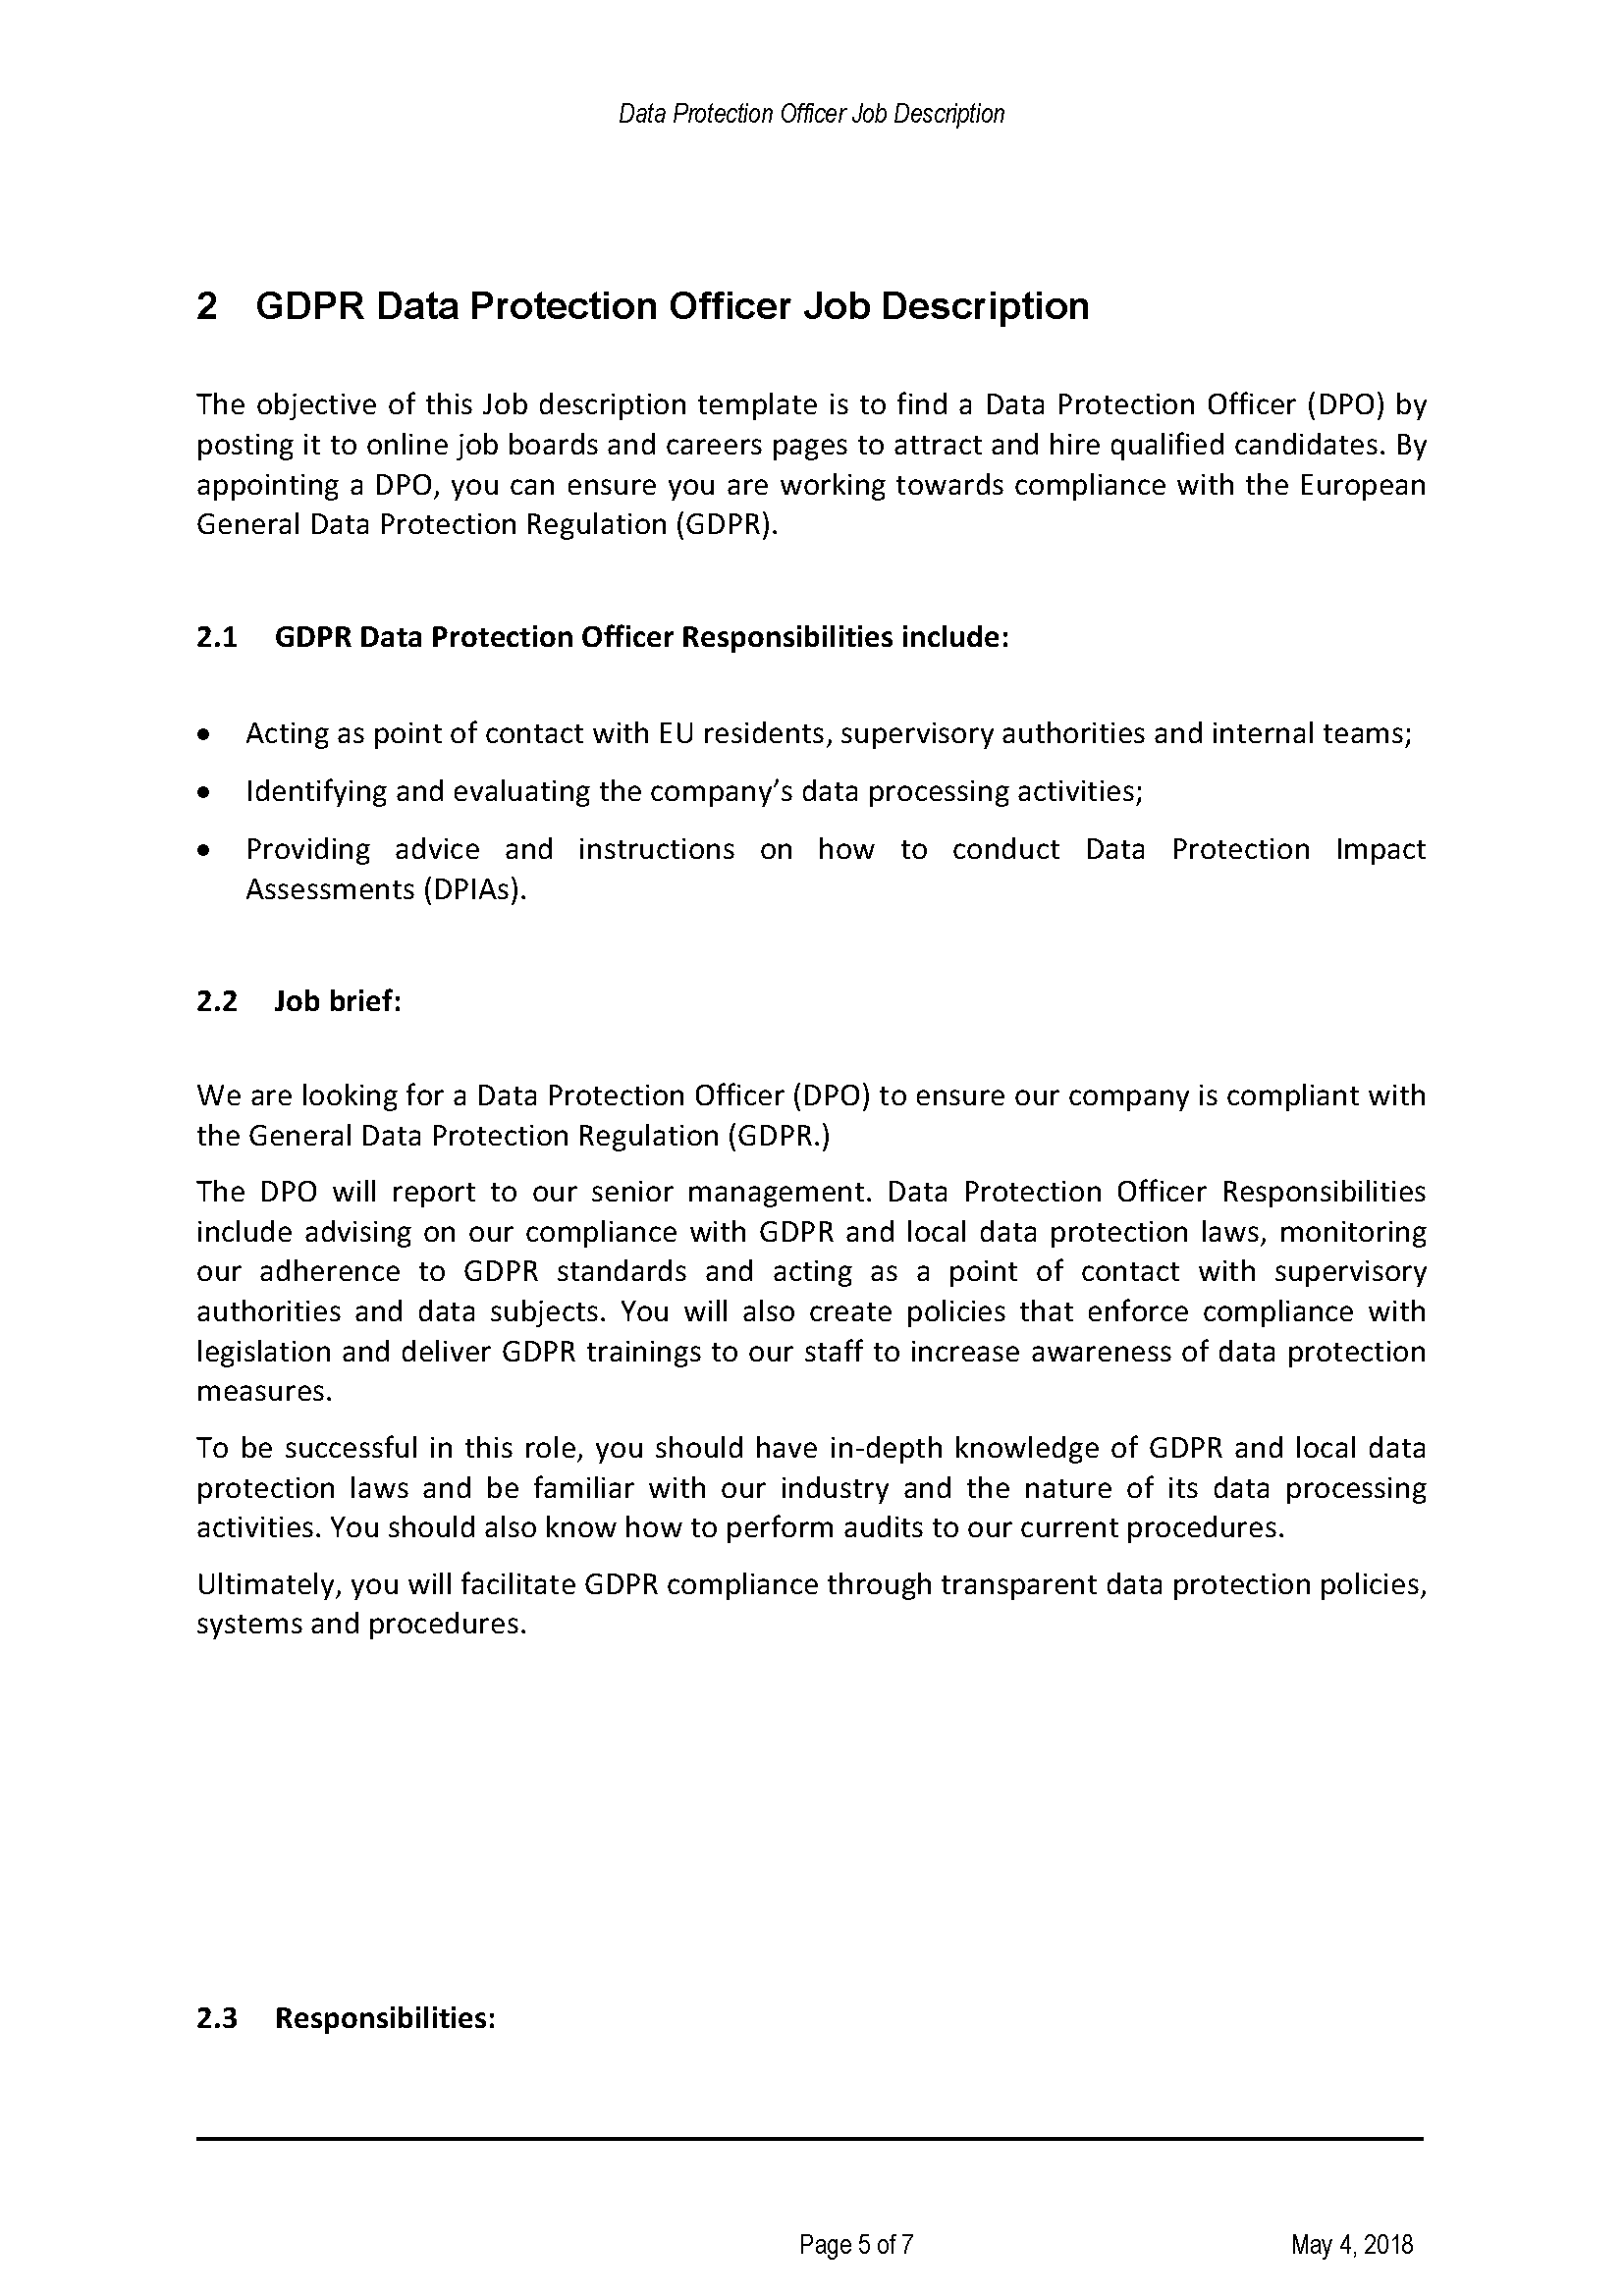 gdpr data protection officer job description template